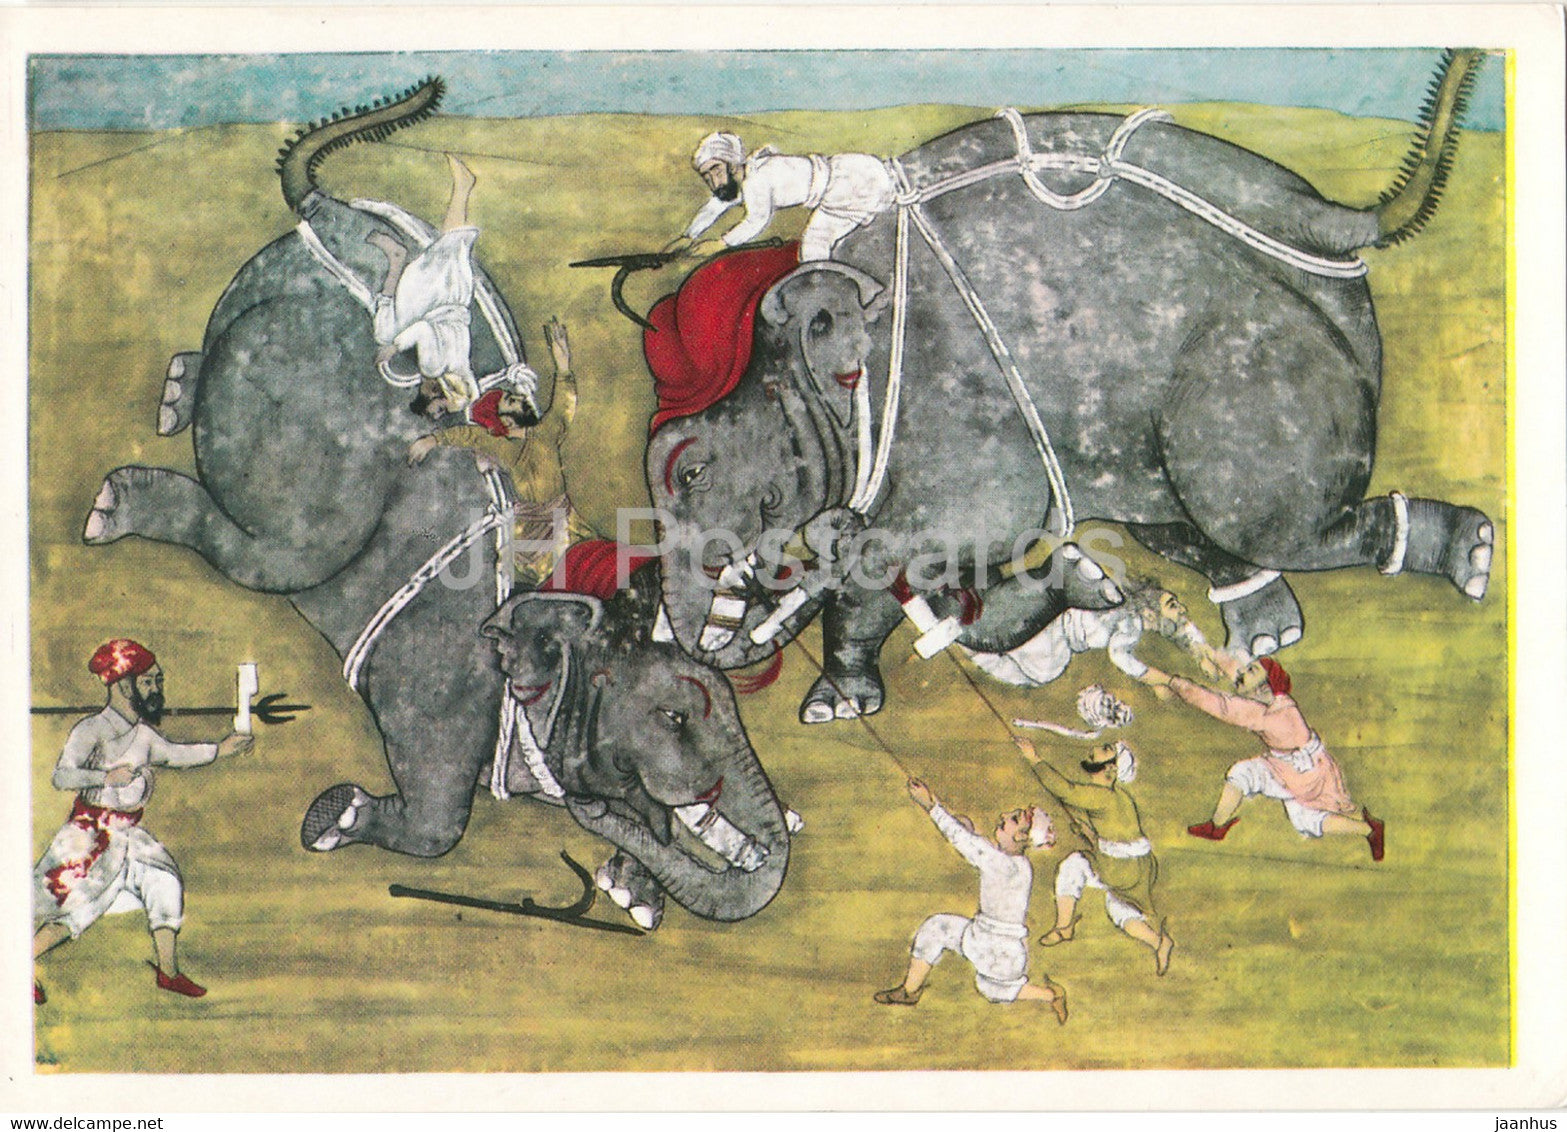 Indische miniatur - Elefantenkampf - Elephant Fight - 1531 - Indian art - Germany DDR - unused - JH Postcards